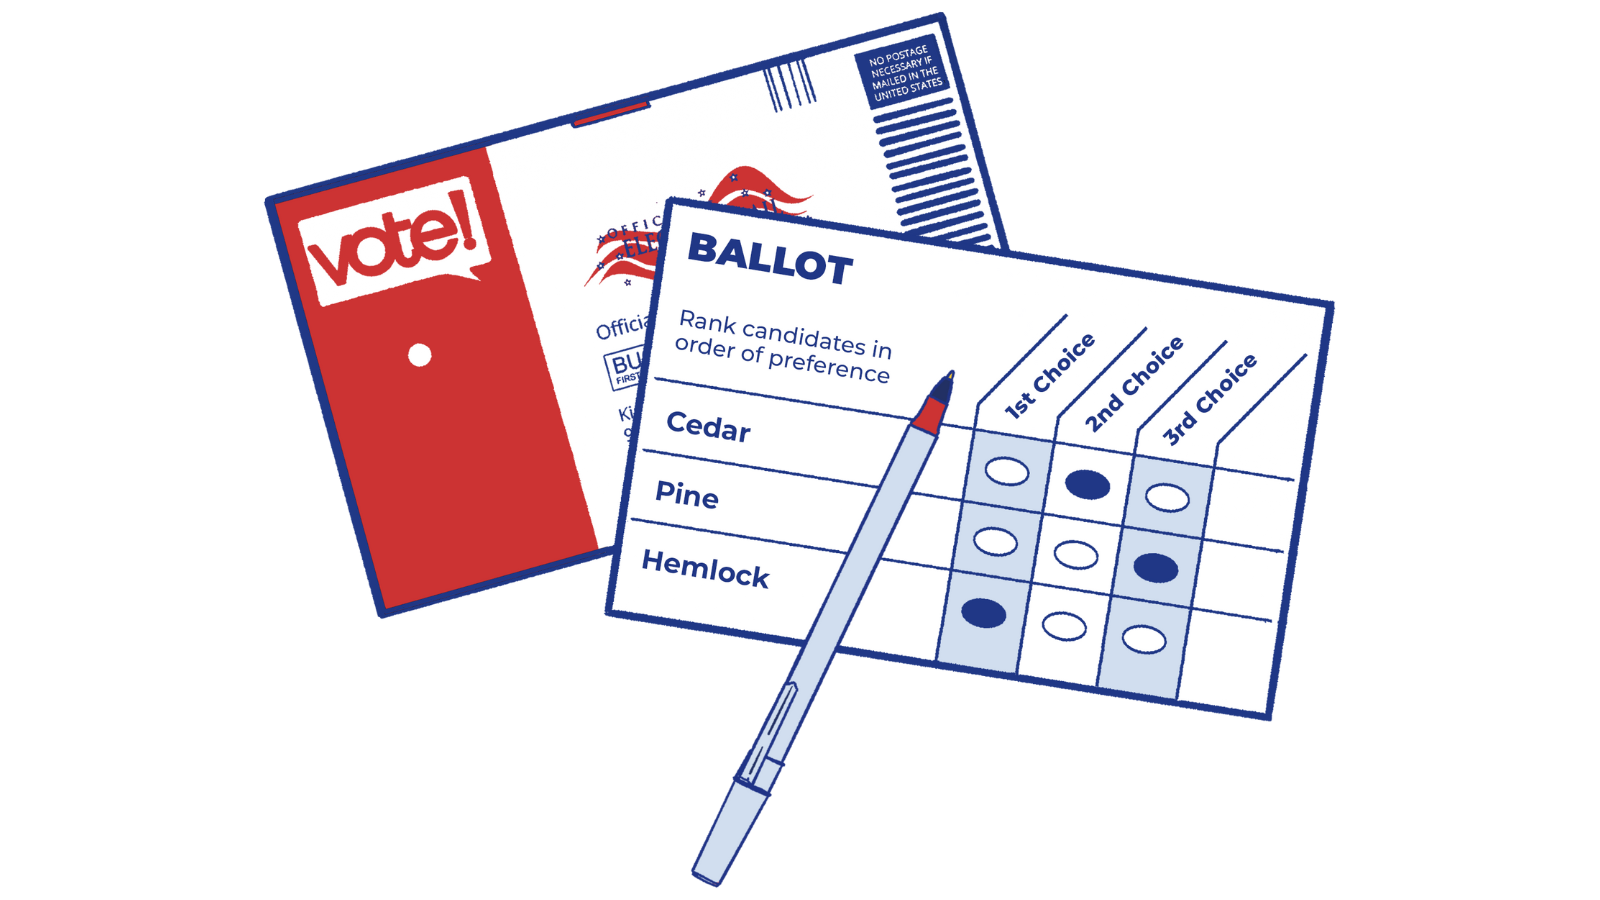 a sample ranked choice ballot is shown